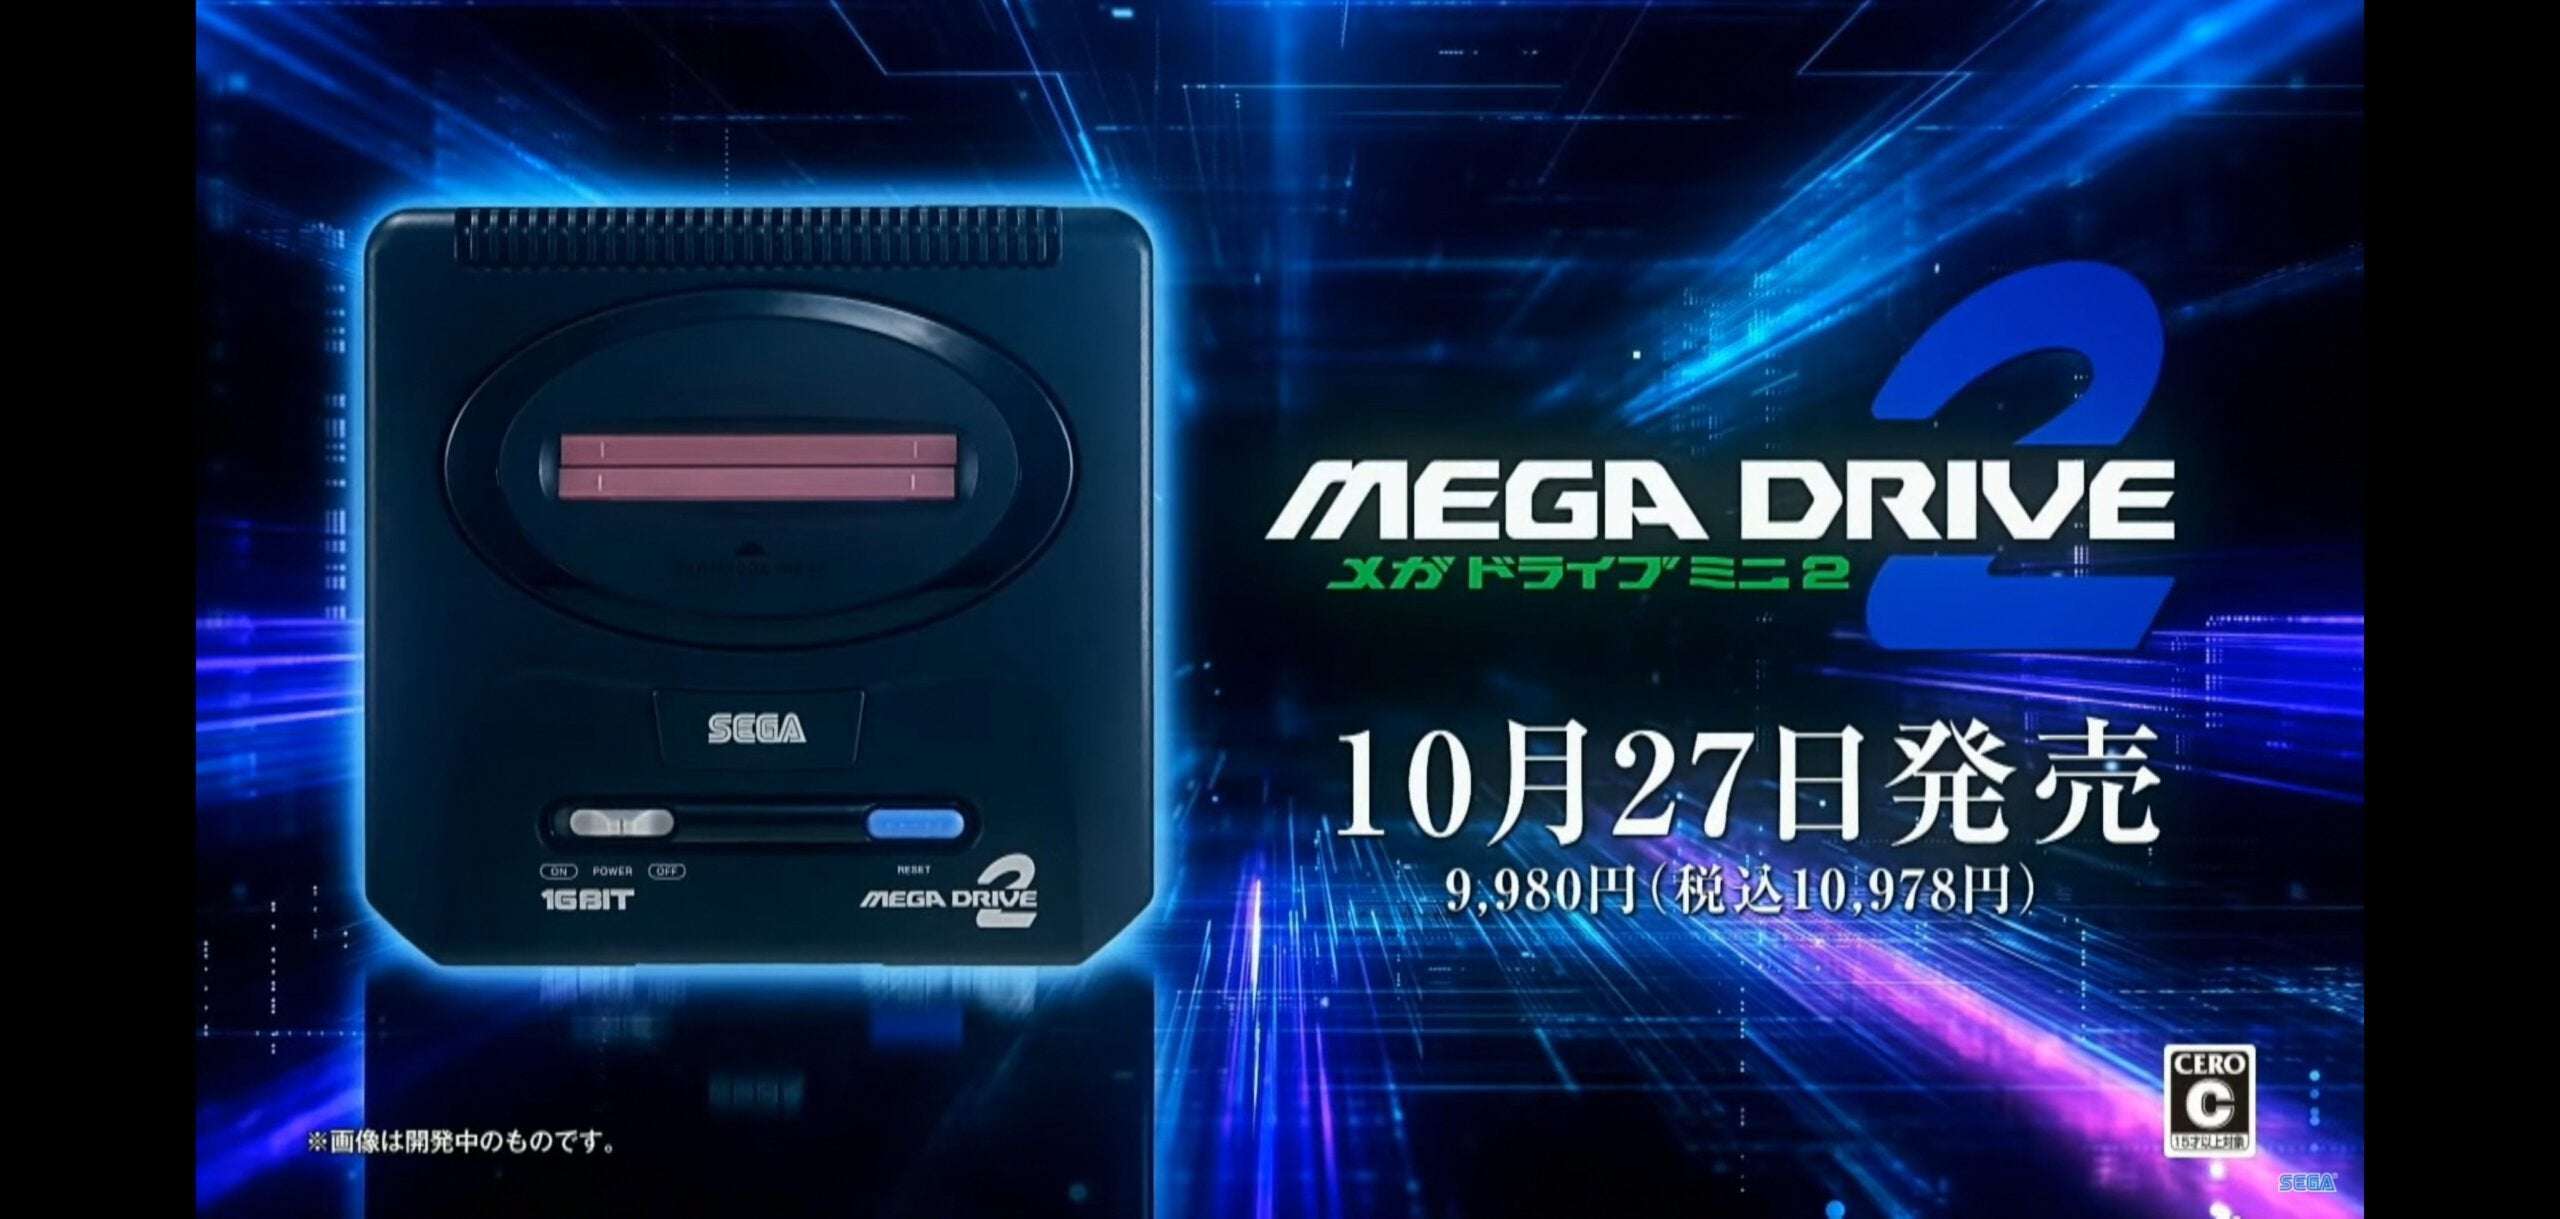 image for Sega has announced a Mega Drive Mini 2, including Mega CD games